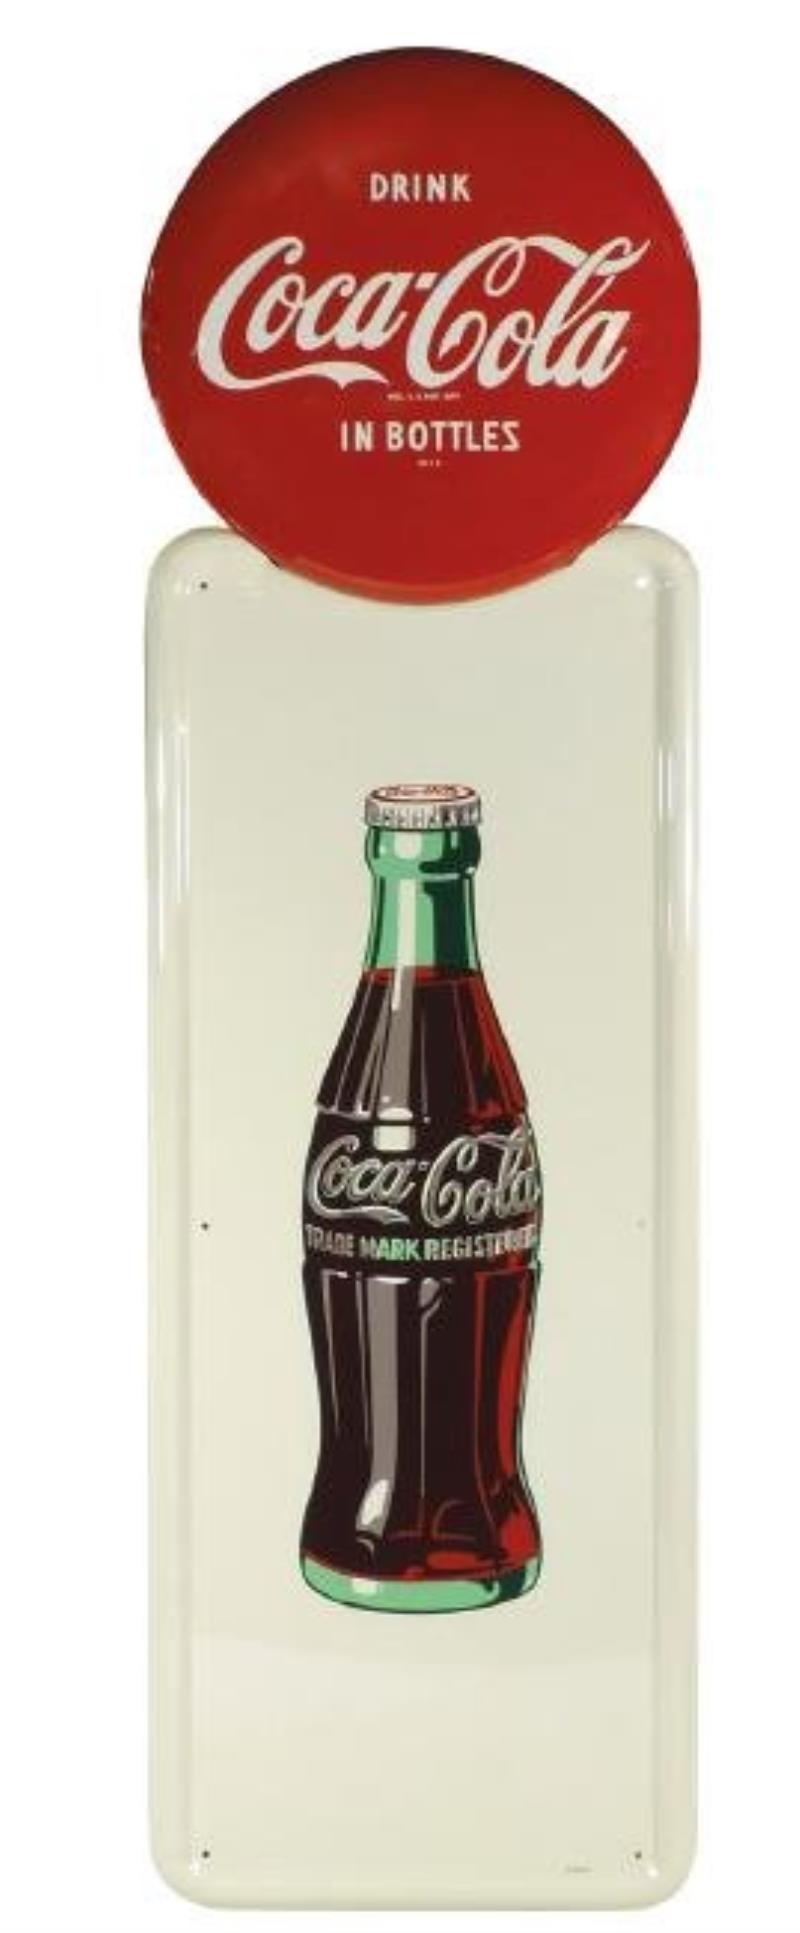 Coca-Cola sign, "Drink Coca-Cola in Bottles" button top